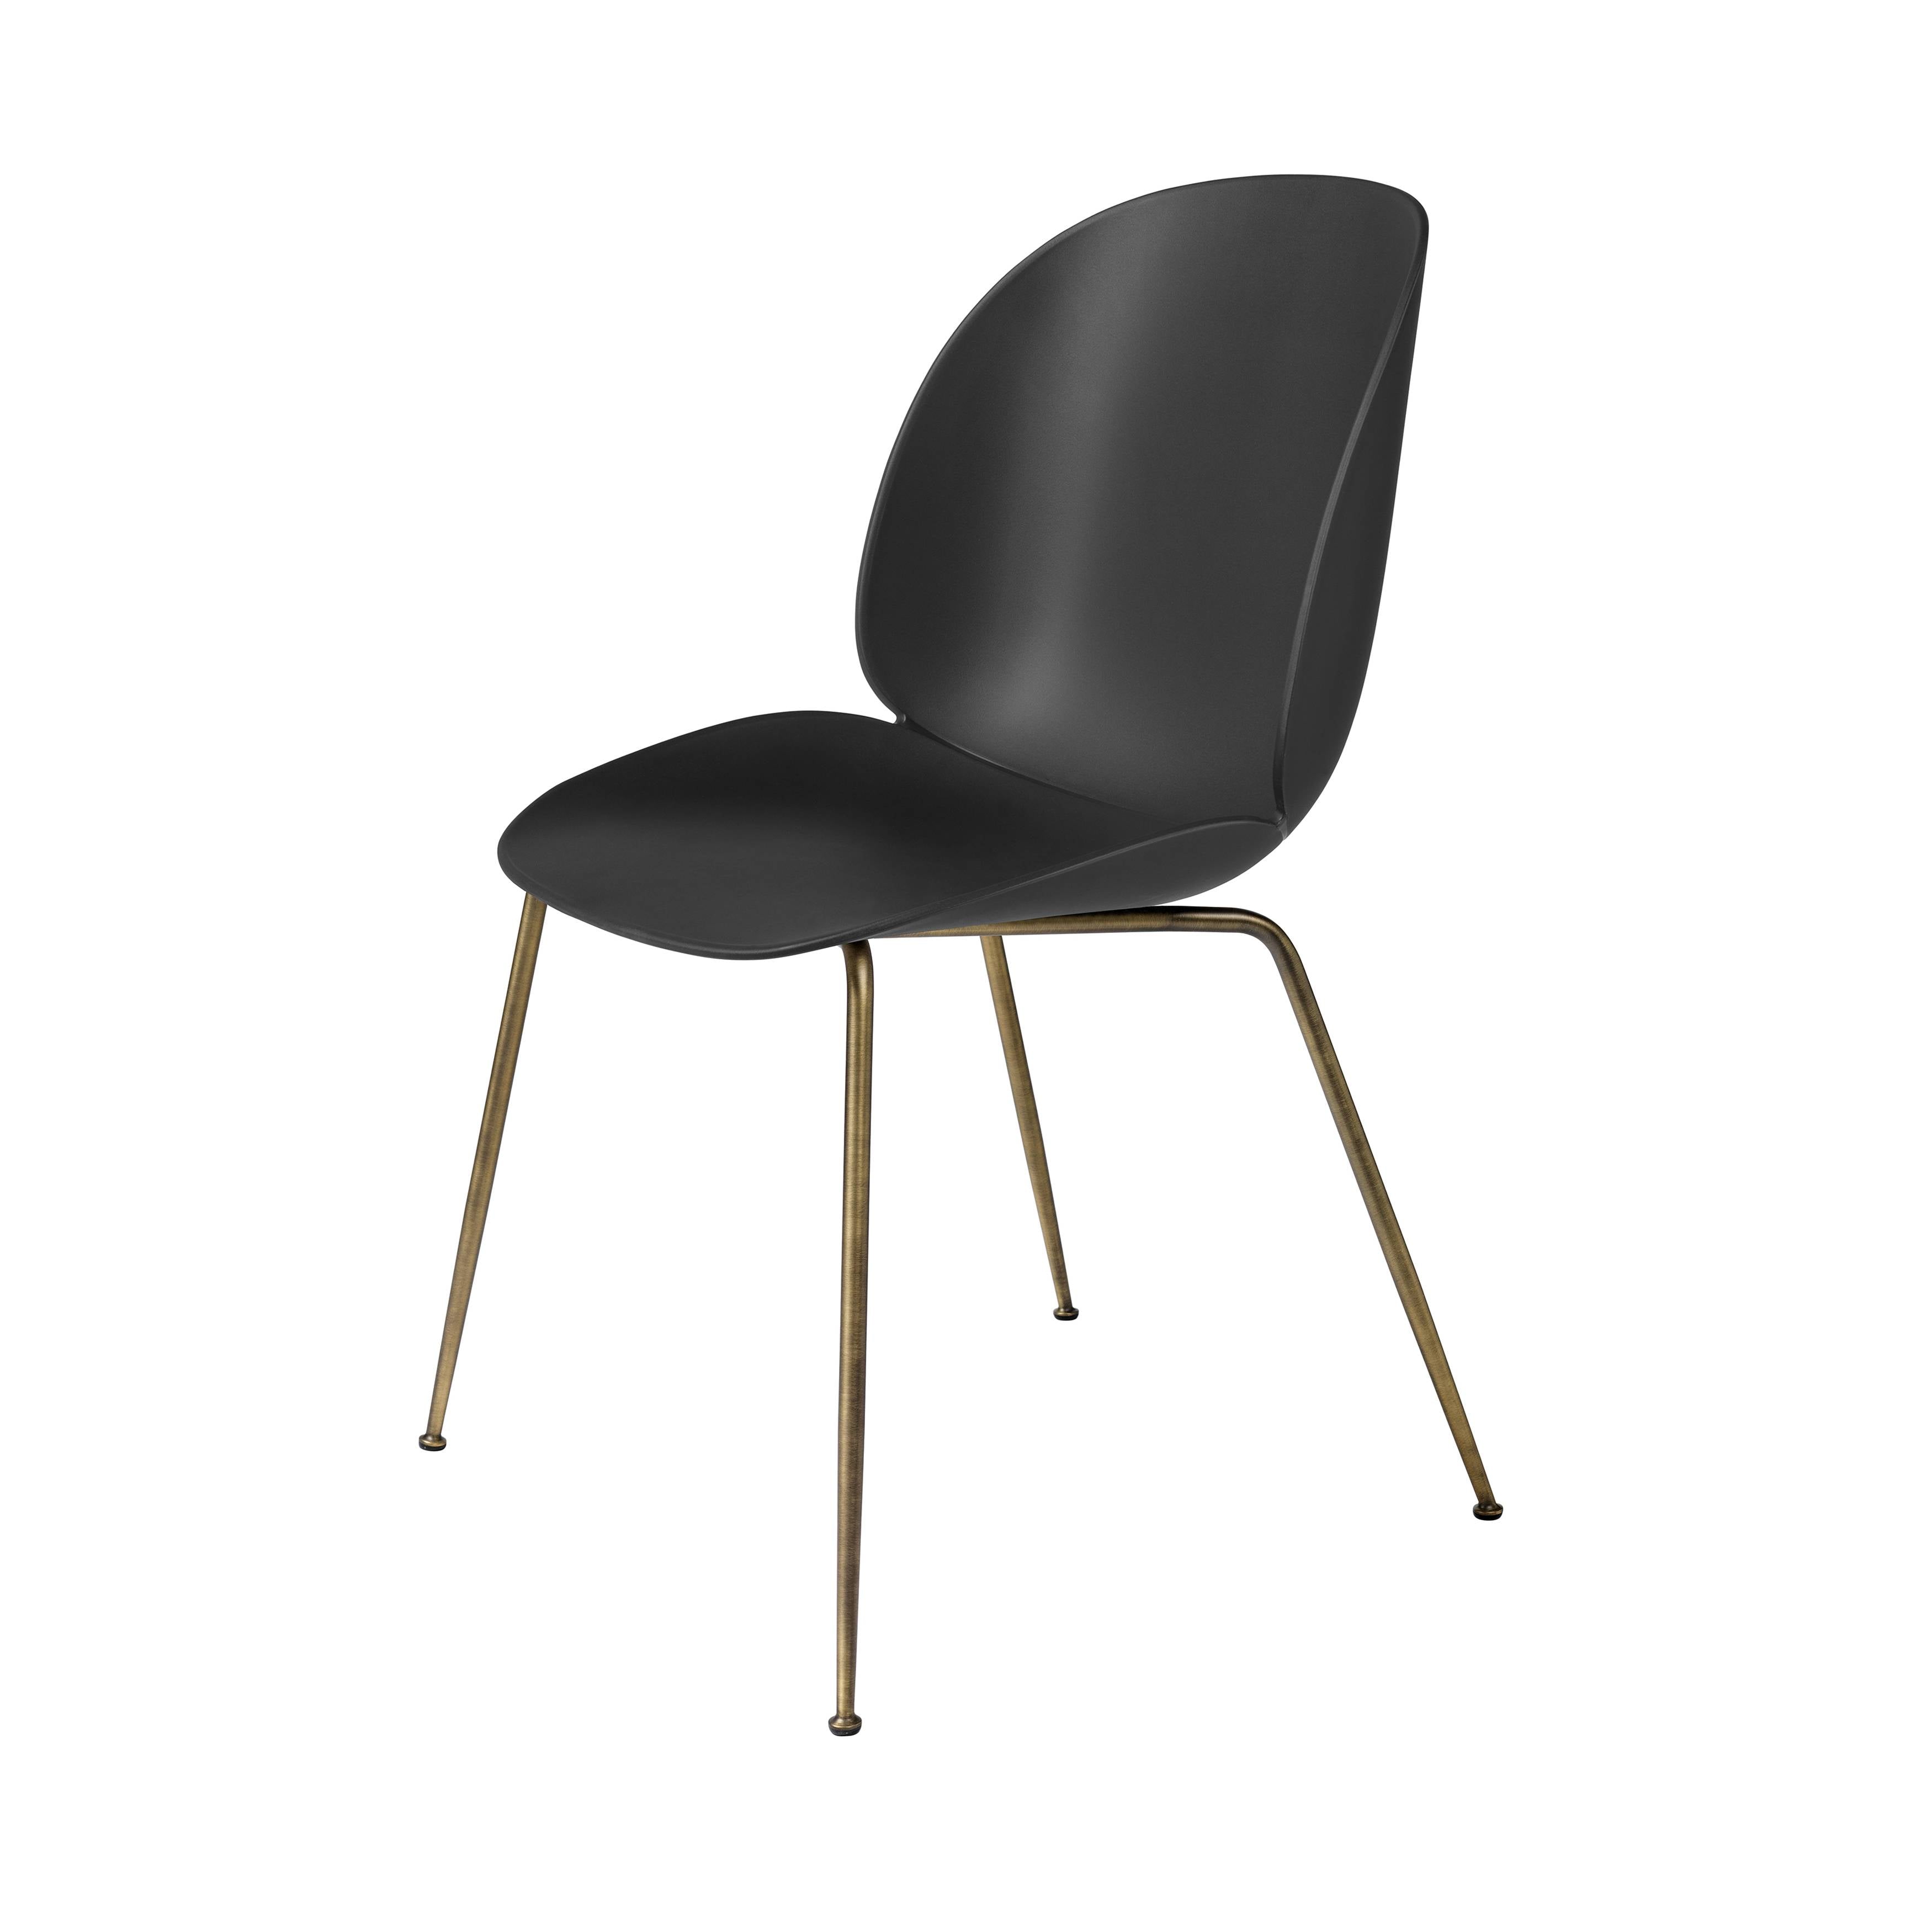 Beetle Dining Chair: Conic Base + Black + Antique Brass + Felt Glides